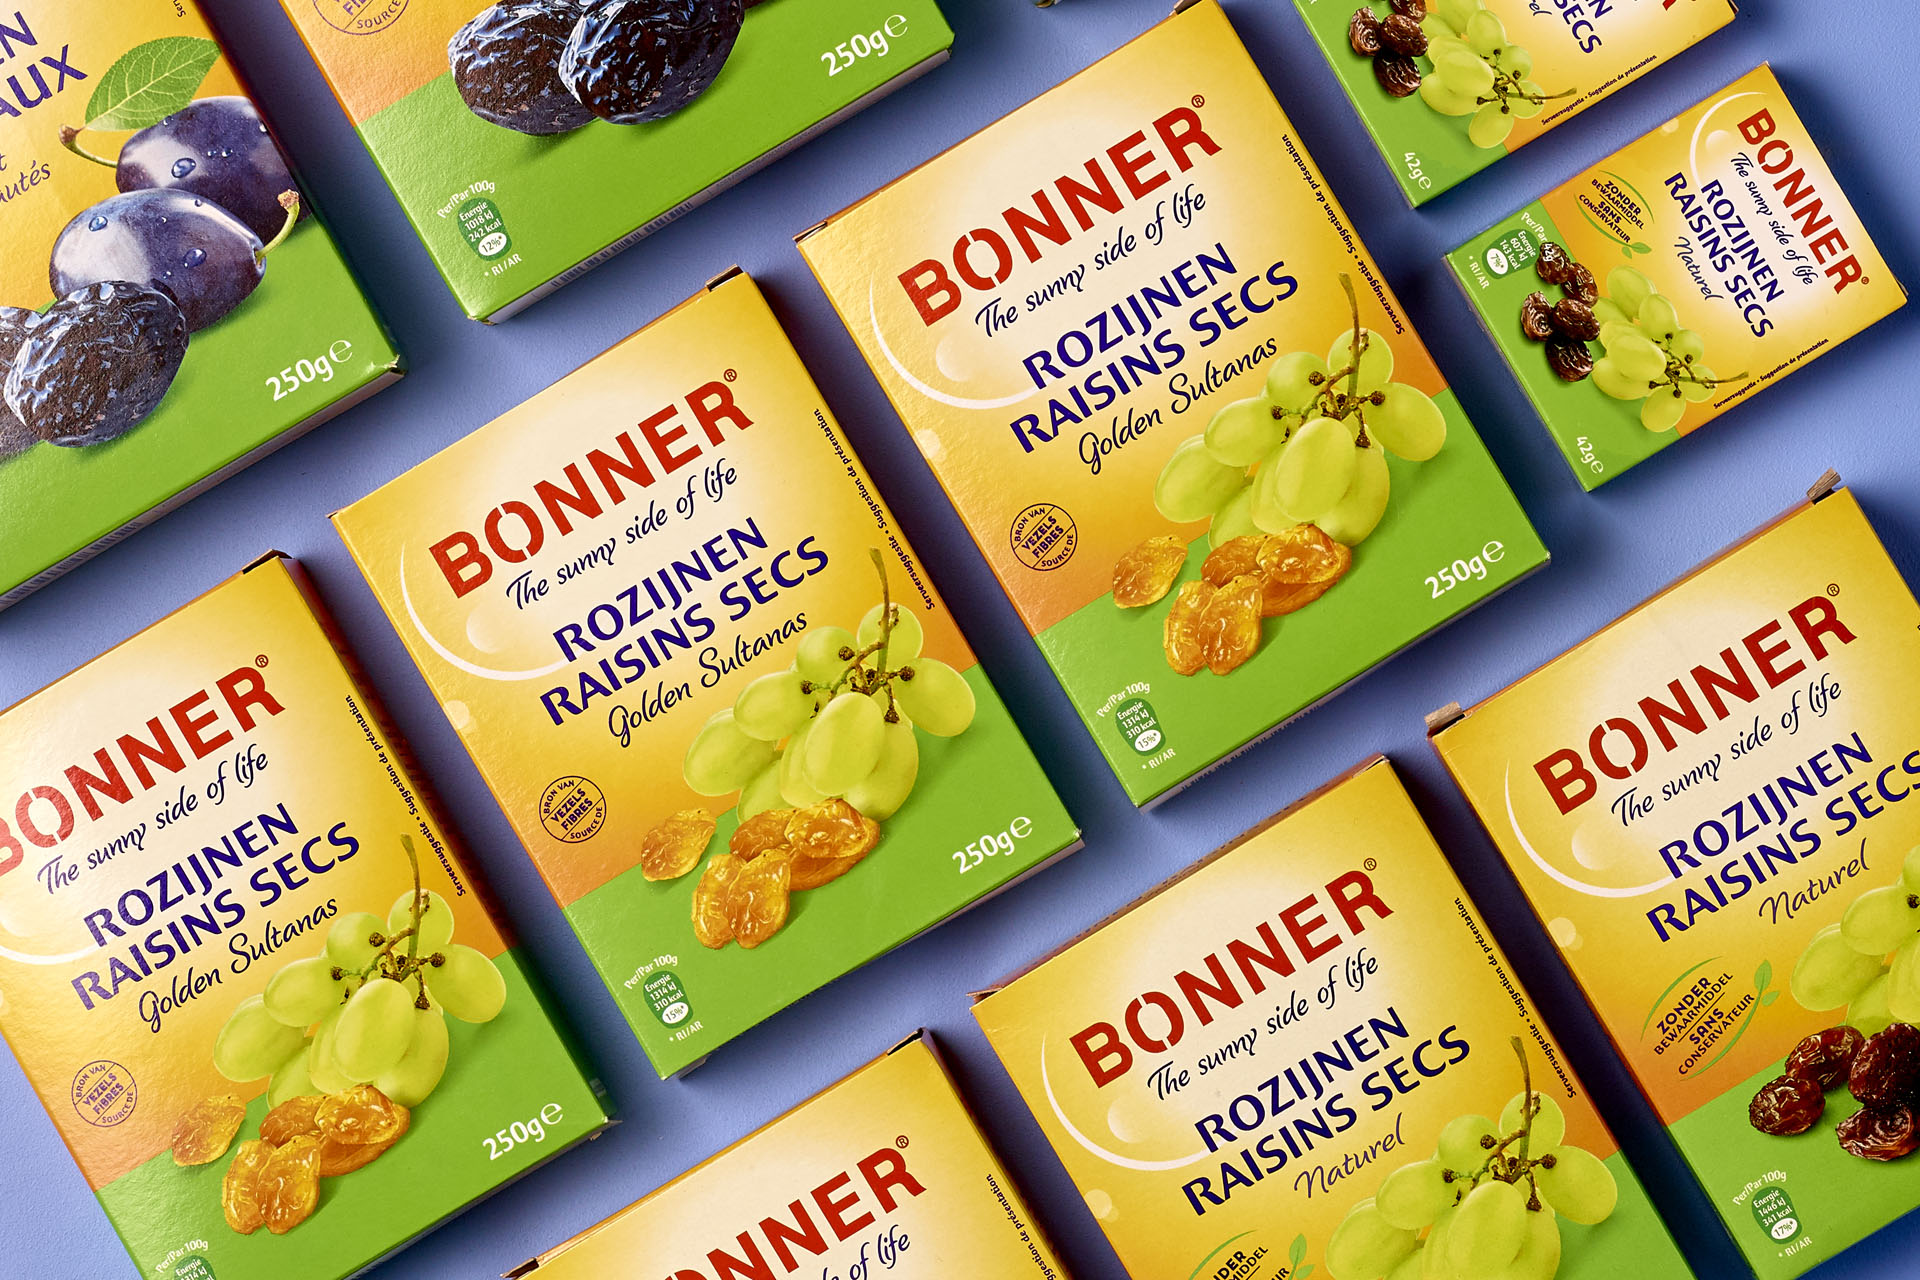 Bonner brand relift by DesignRepublic, branding and packaging design agency Belgium